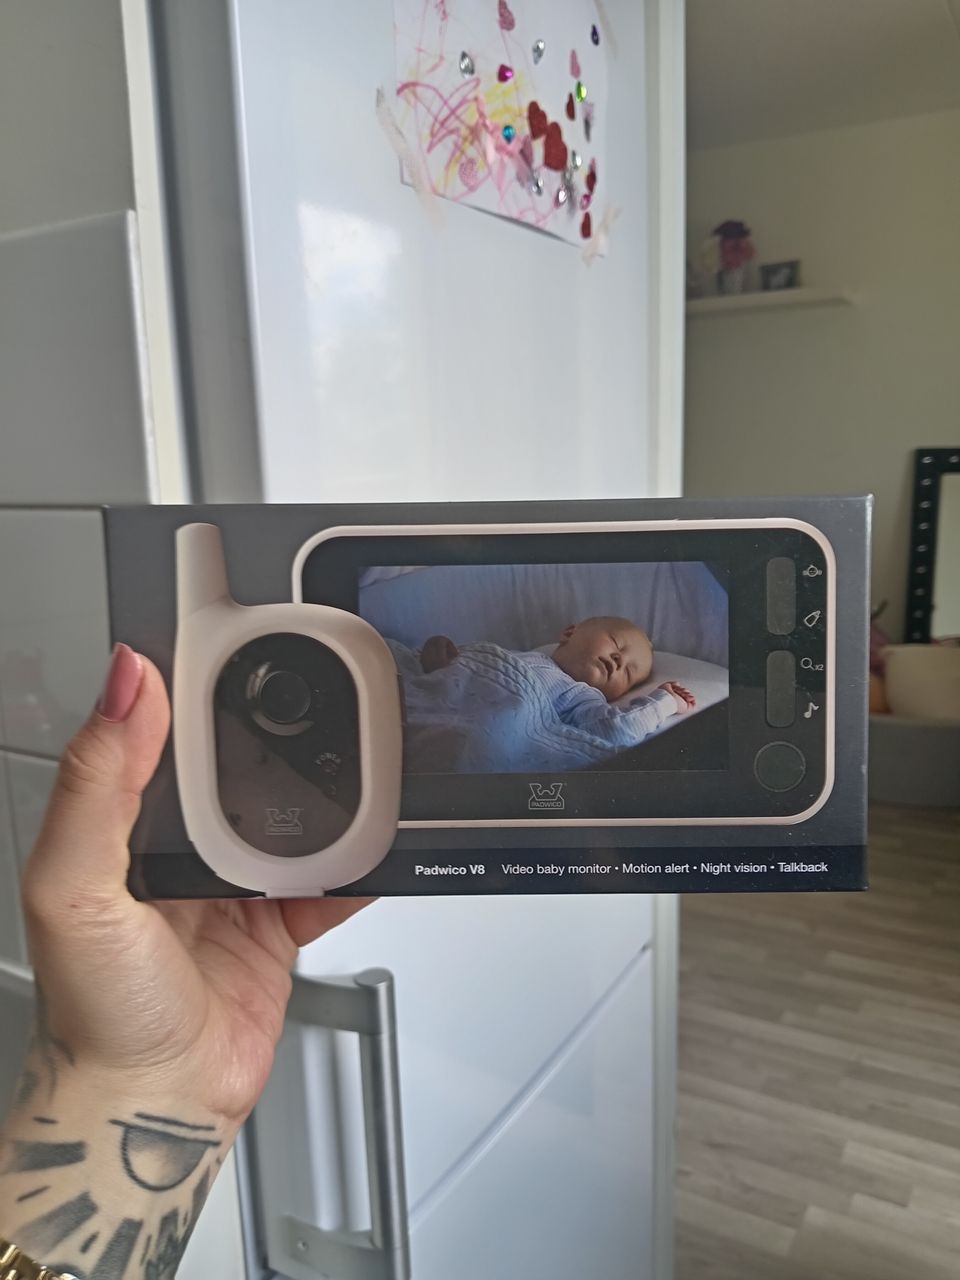 Padwico V8 baby monitor